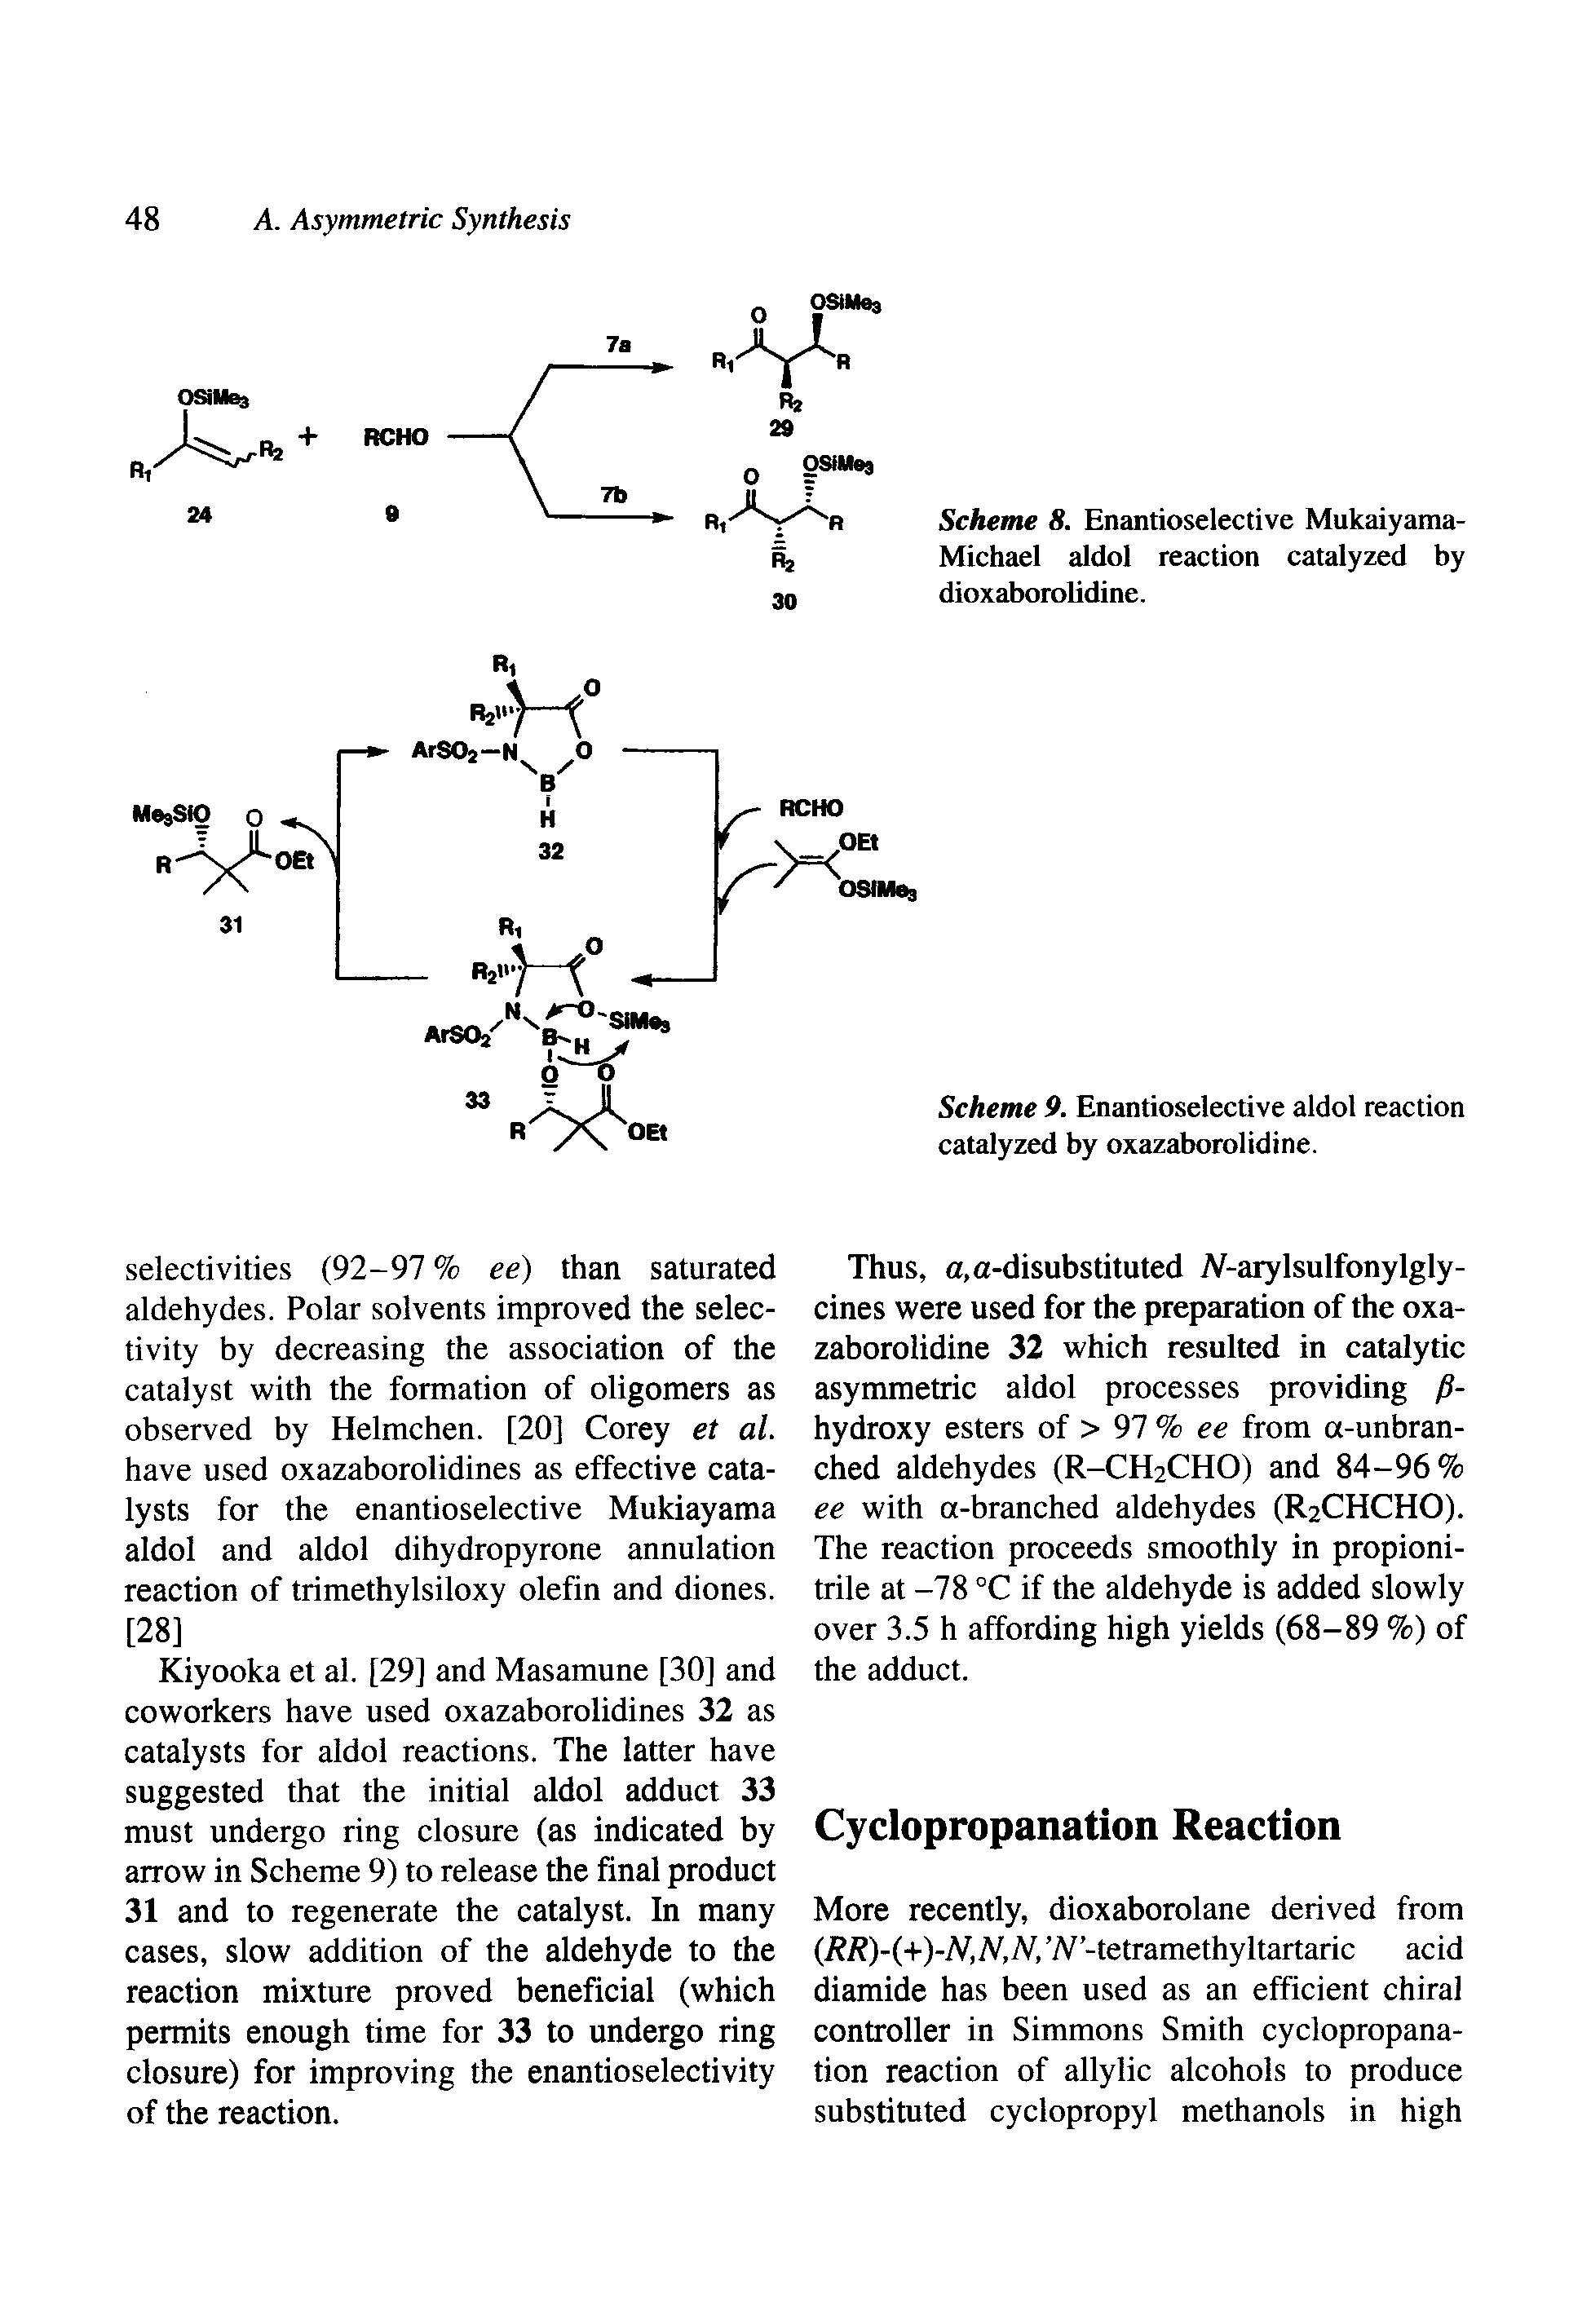 Scheme 8. Enantioselective Mukaiyama-Michael aldol reaction catalyzed by dioxaborolidine.